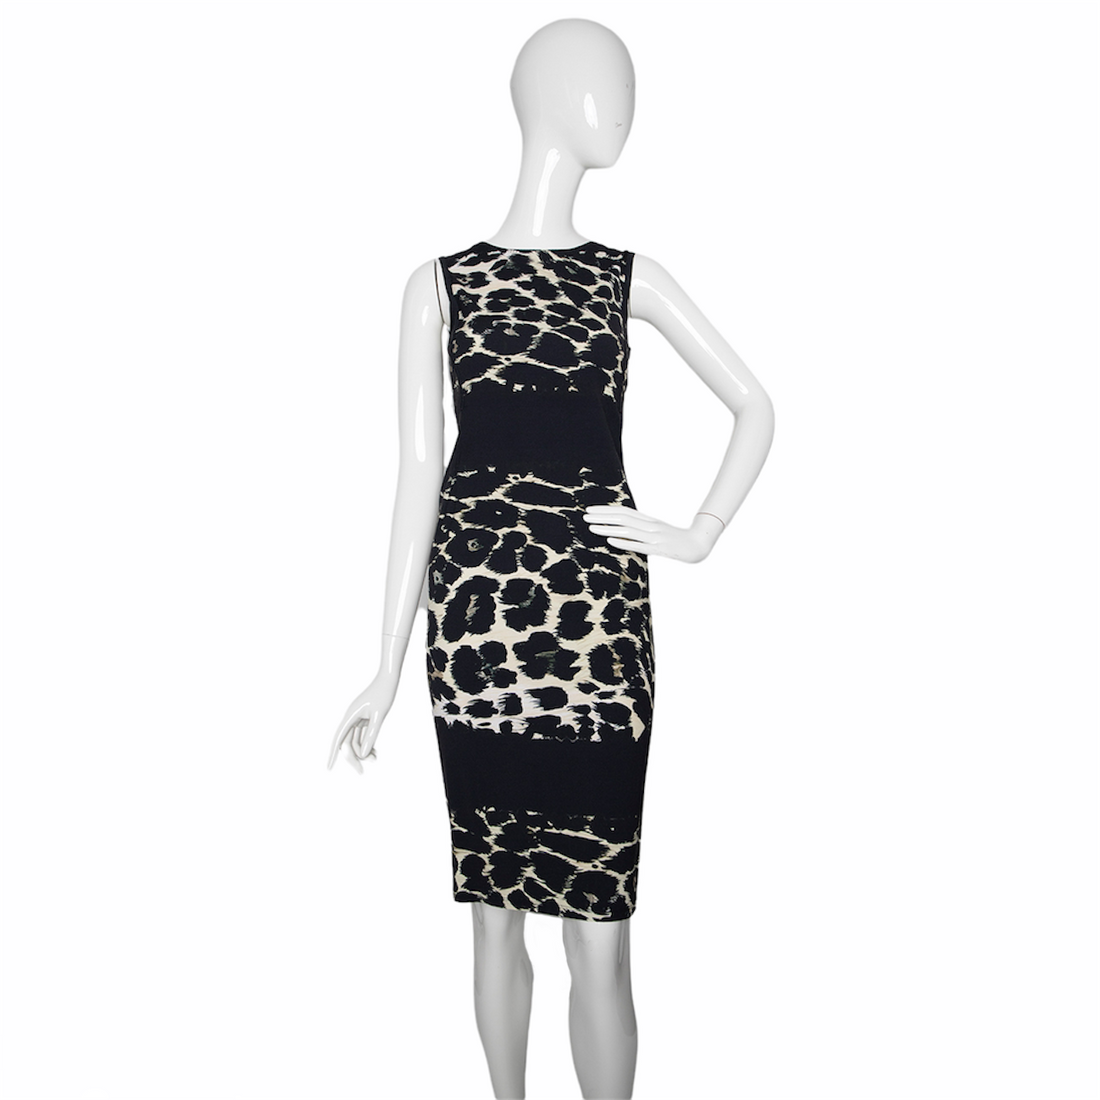 Roberto Cavalli dress with leopard print